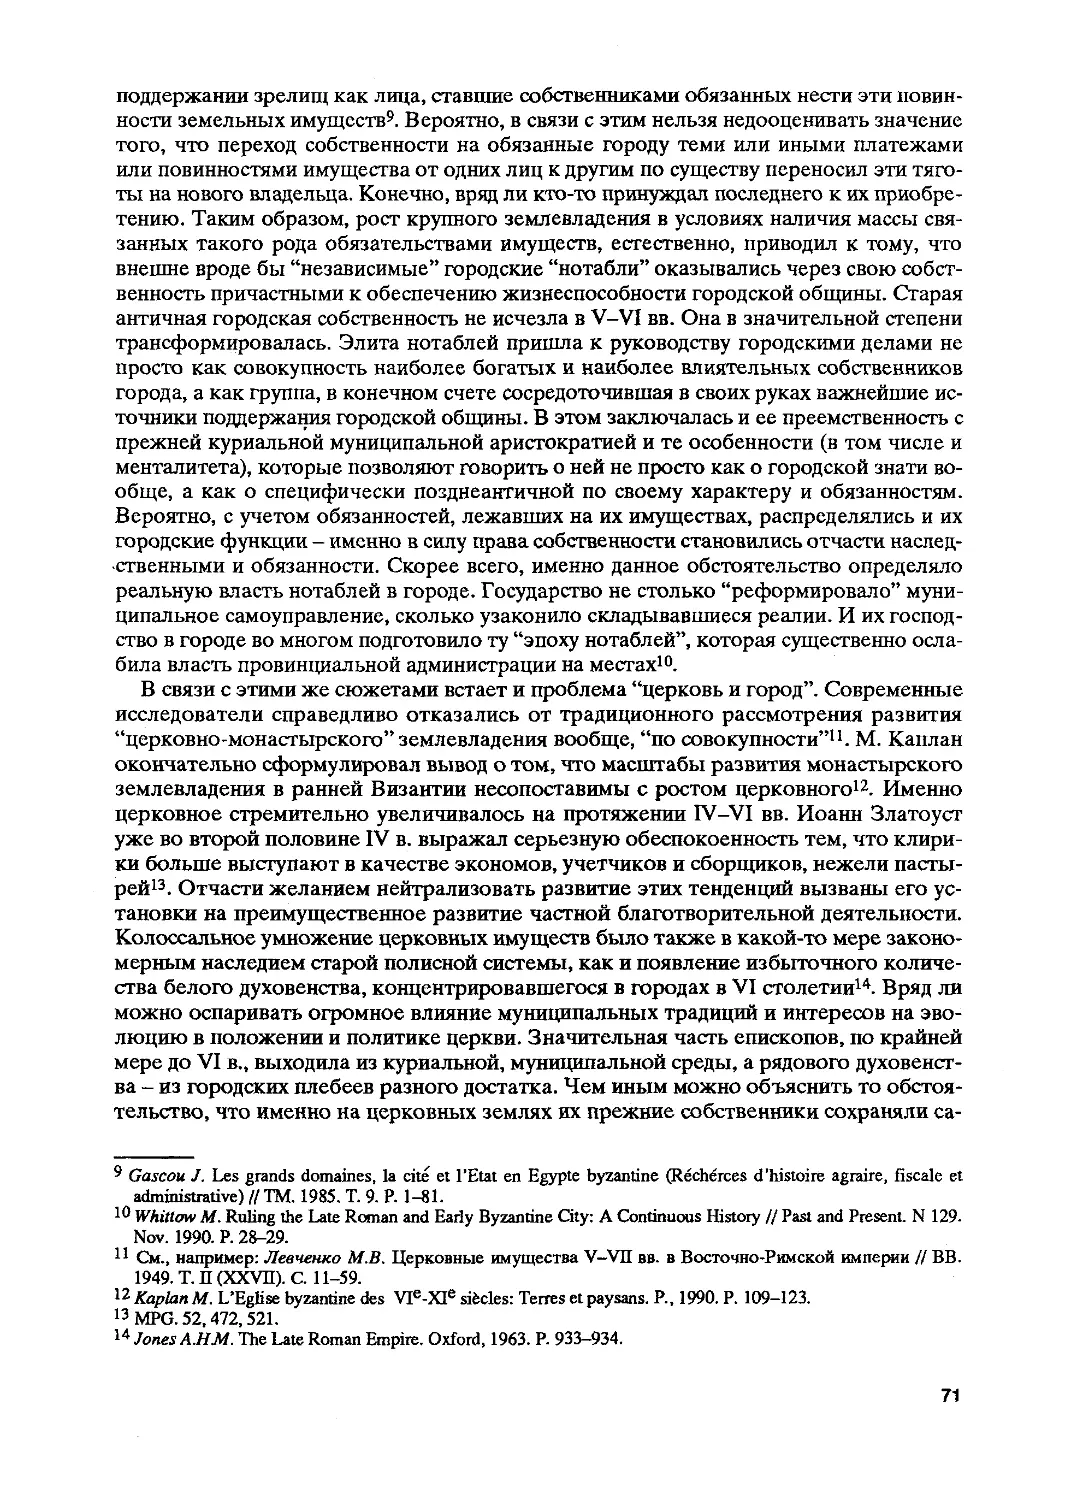 BB 55_1 Á994ù 72.pdf